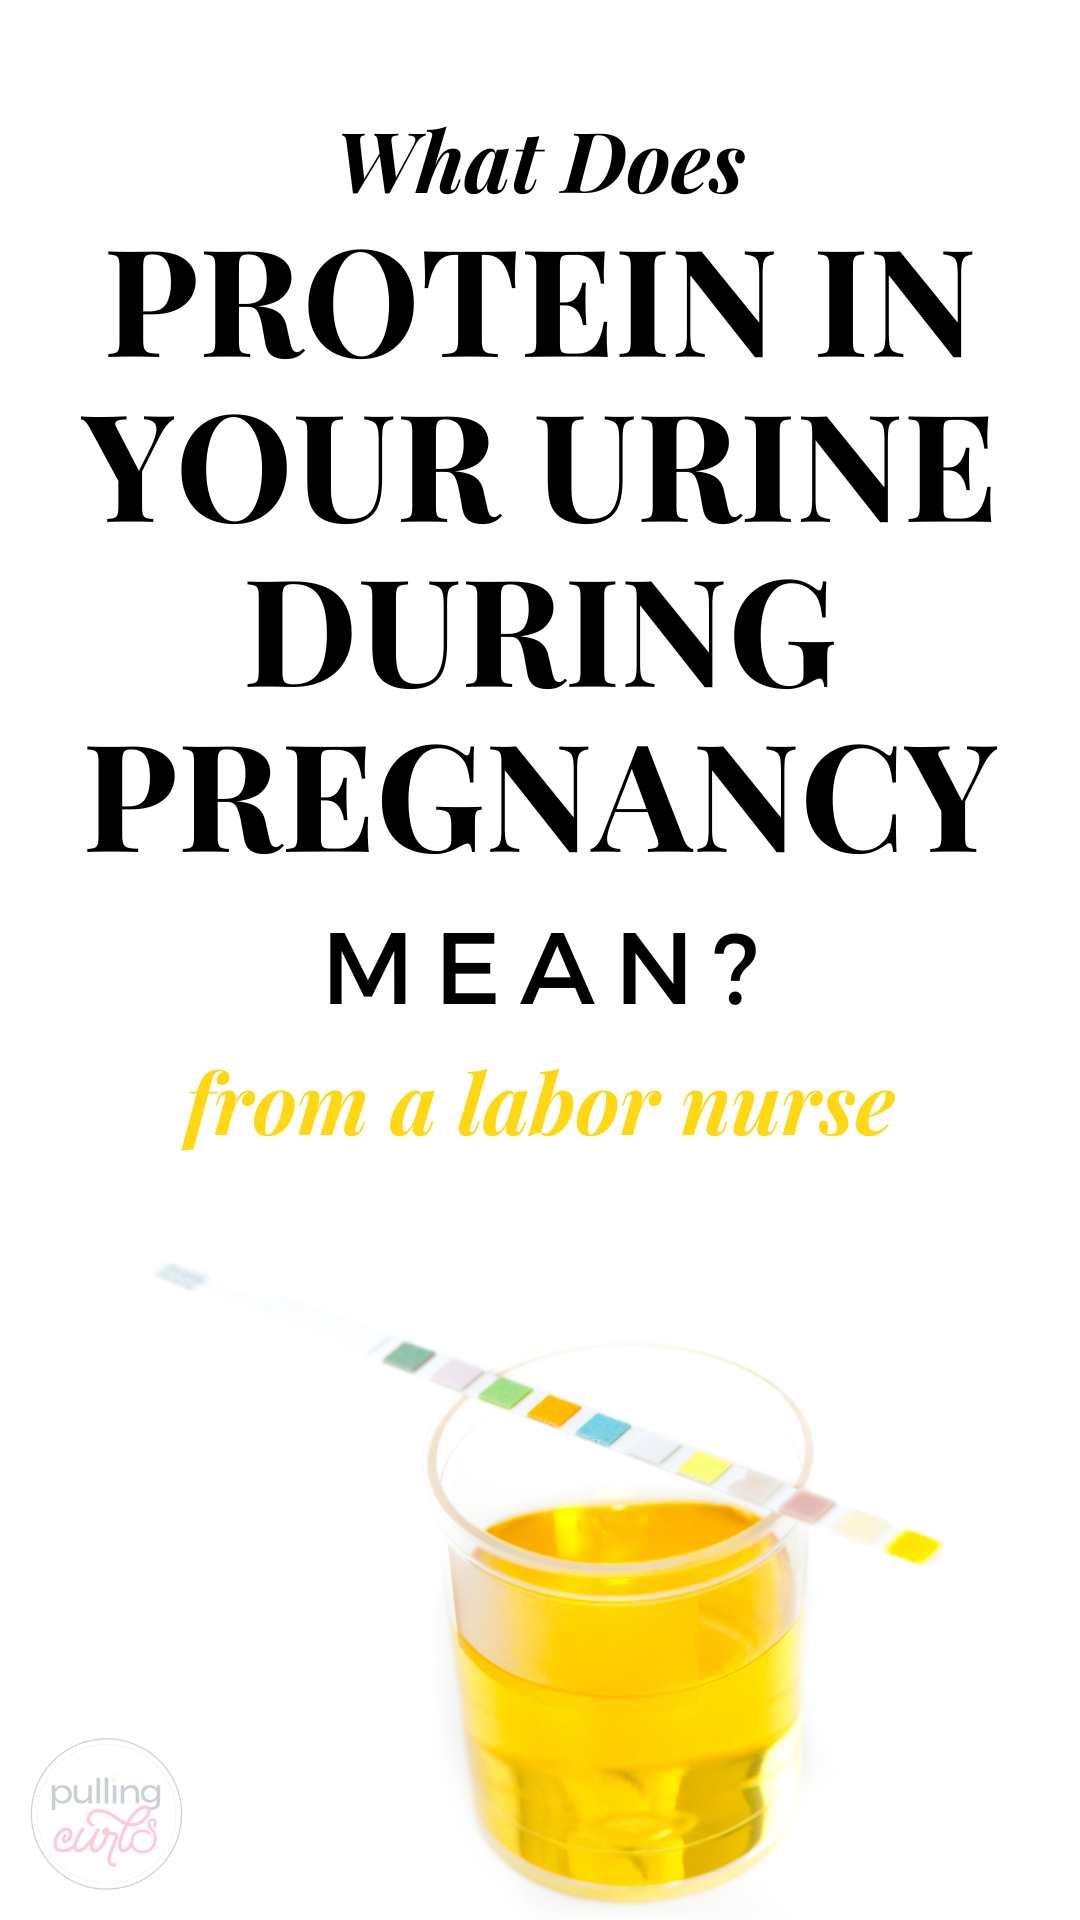 https://www.pullingcurls.com/wp-content/uploads/2022/07/protein-in-urine-during-pregnancy.jpg